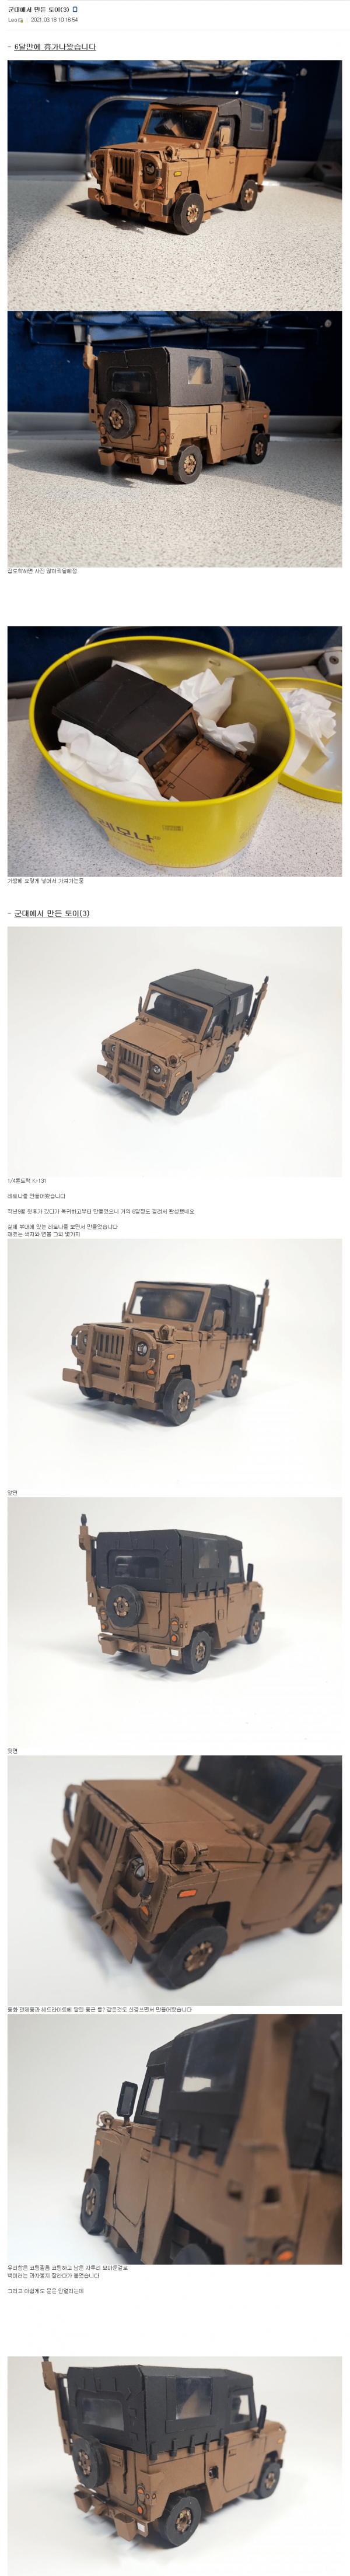 Internet_20231202_063148_1.png 군대에서 만든 레토나 장난감..jpg